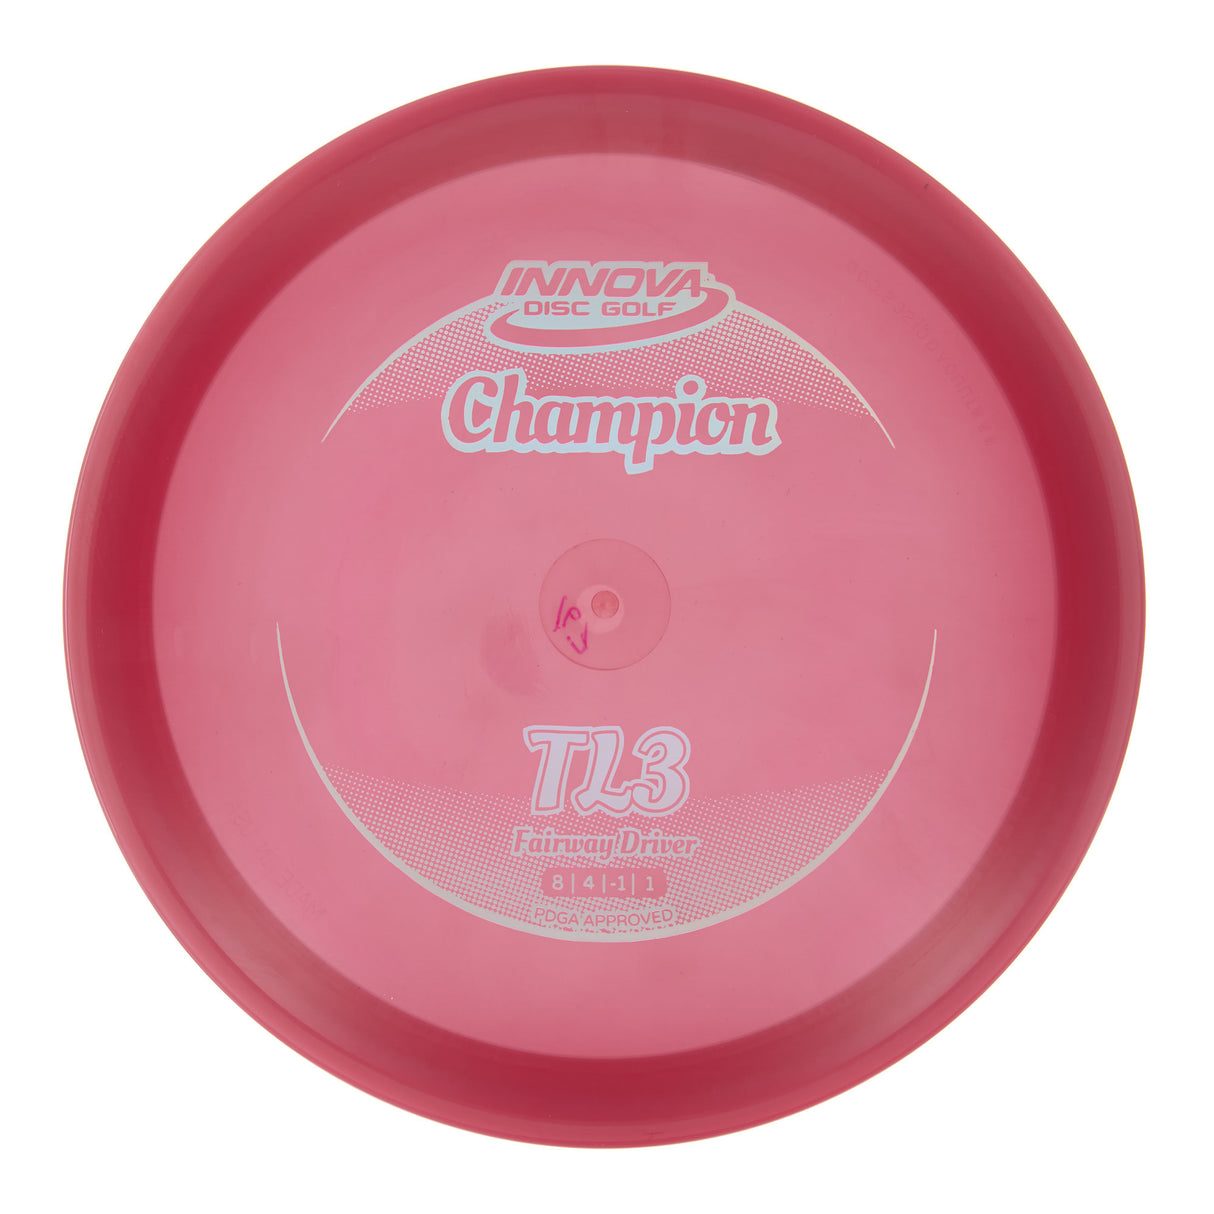 Innova TL3 - Champion 169g | Style 0004